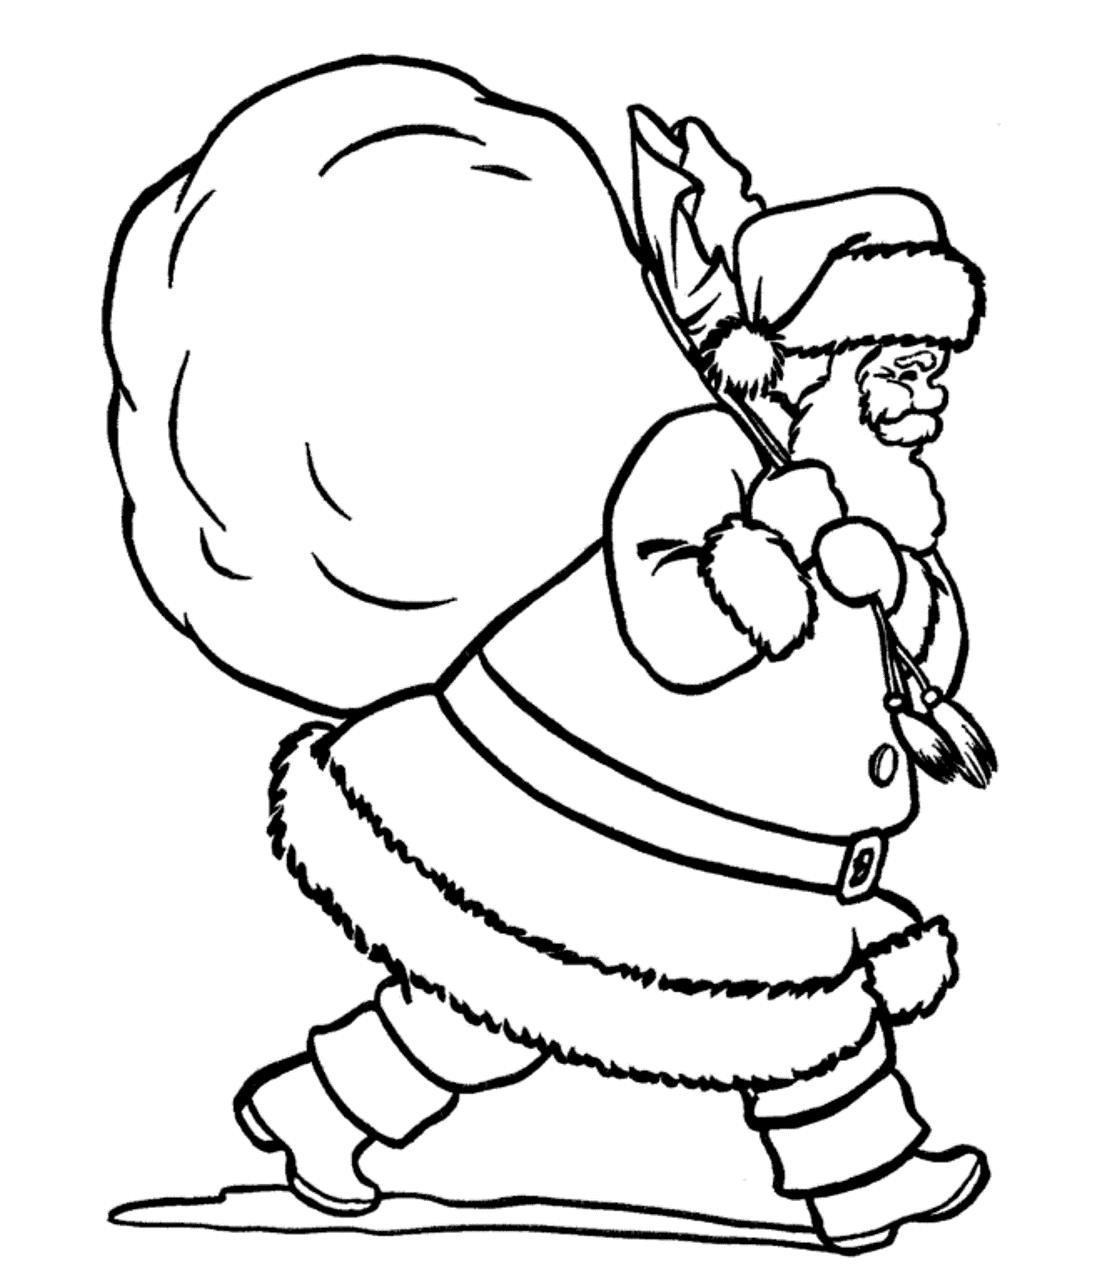 Короткие стихи про Деда Мороза: 25 лучших